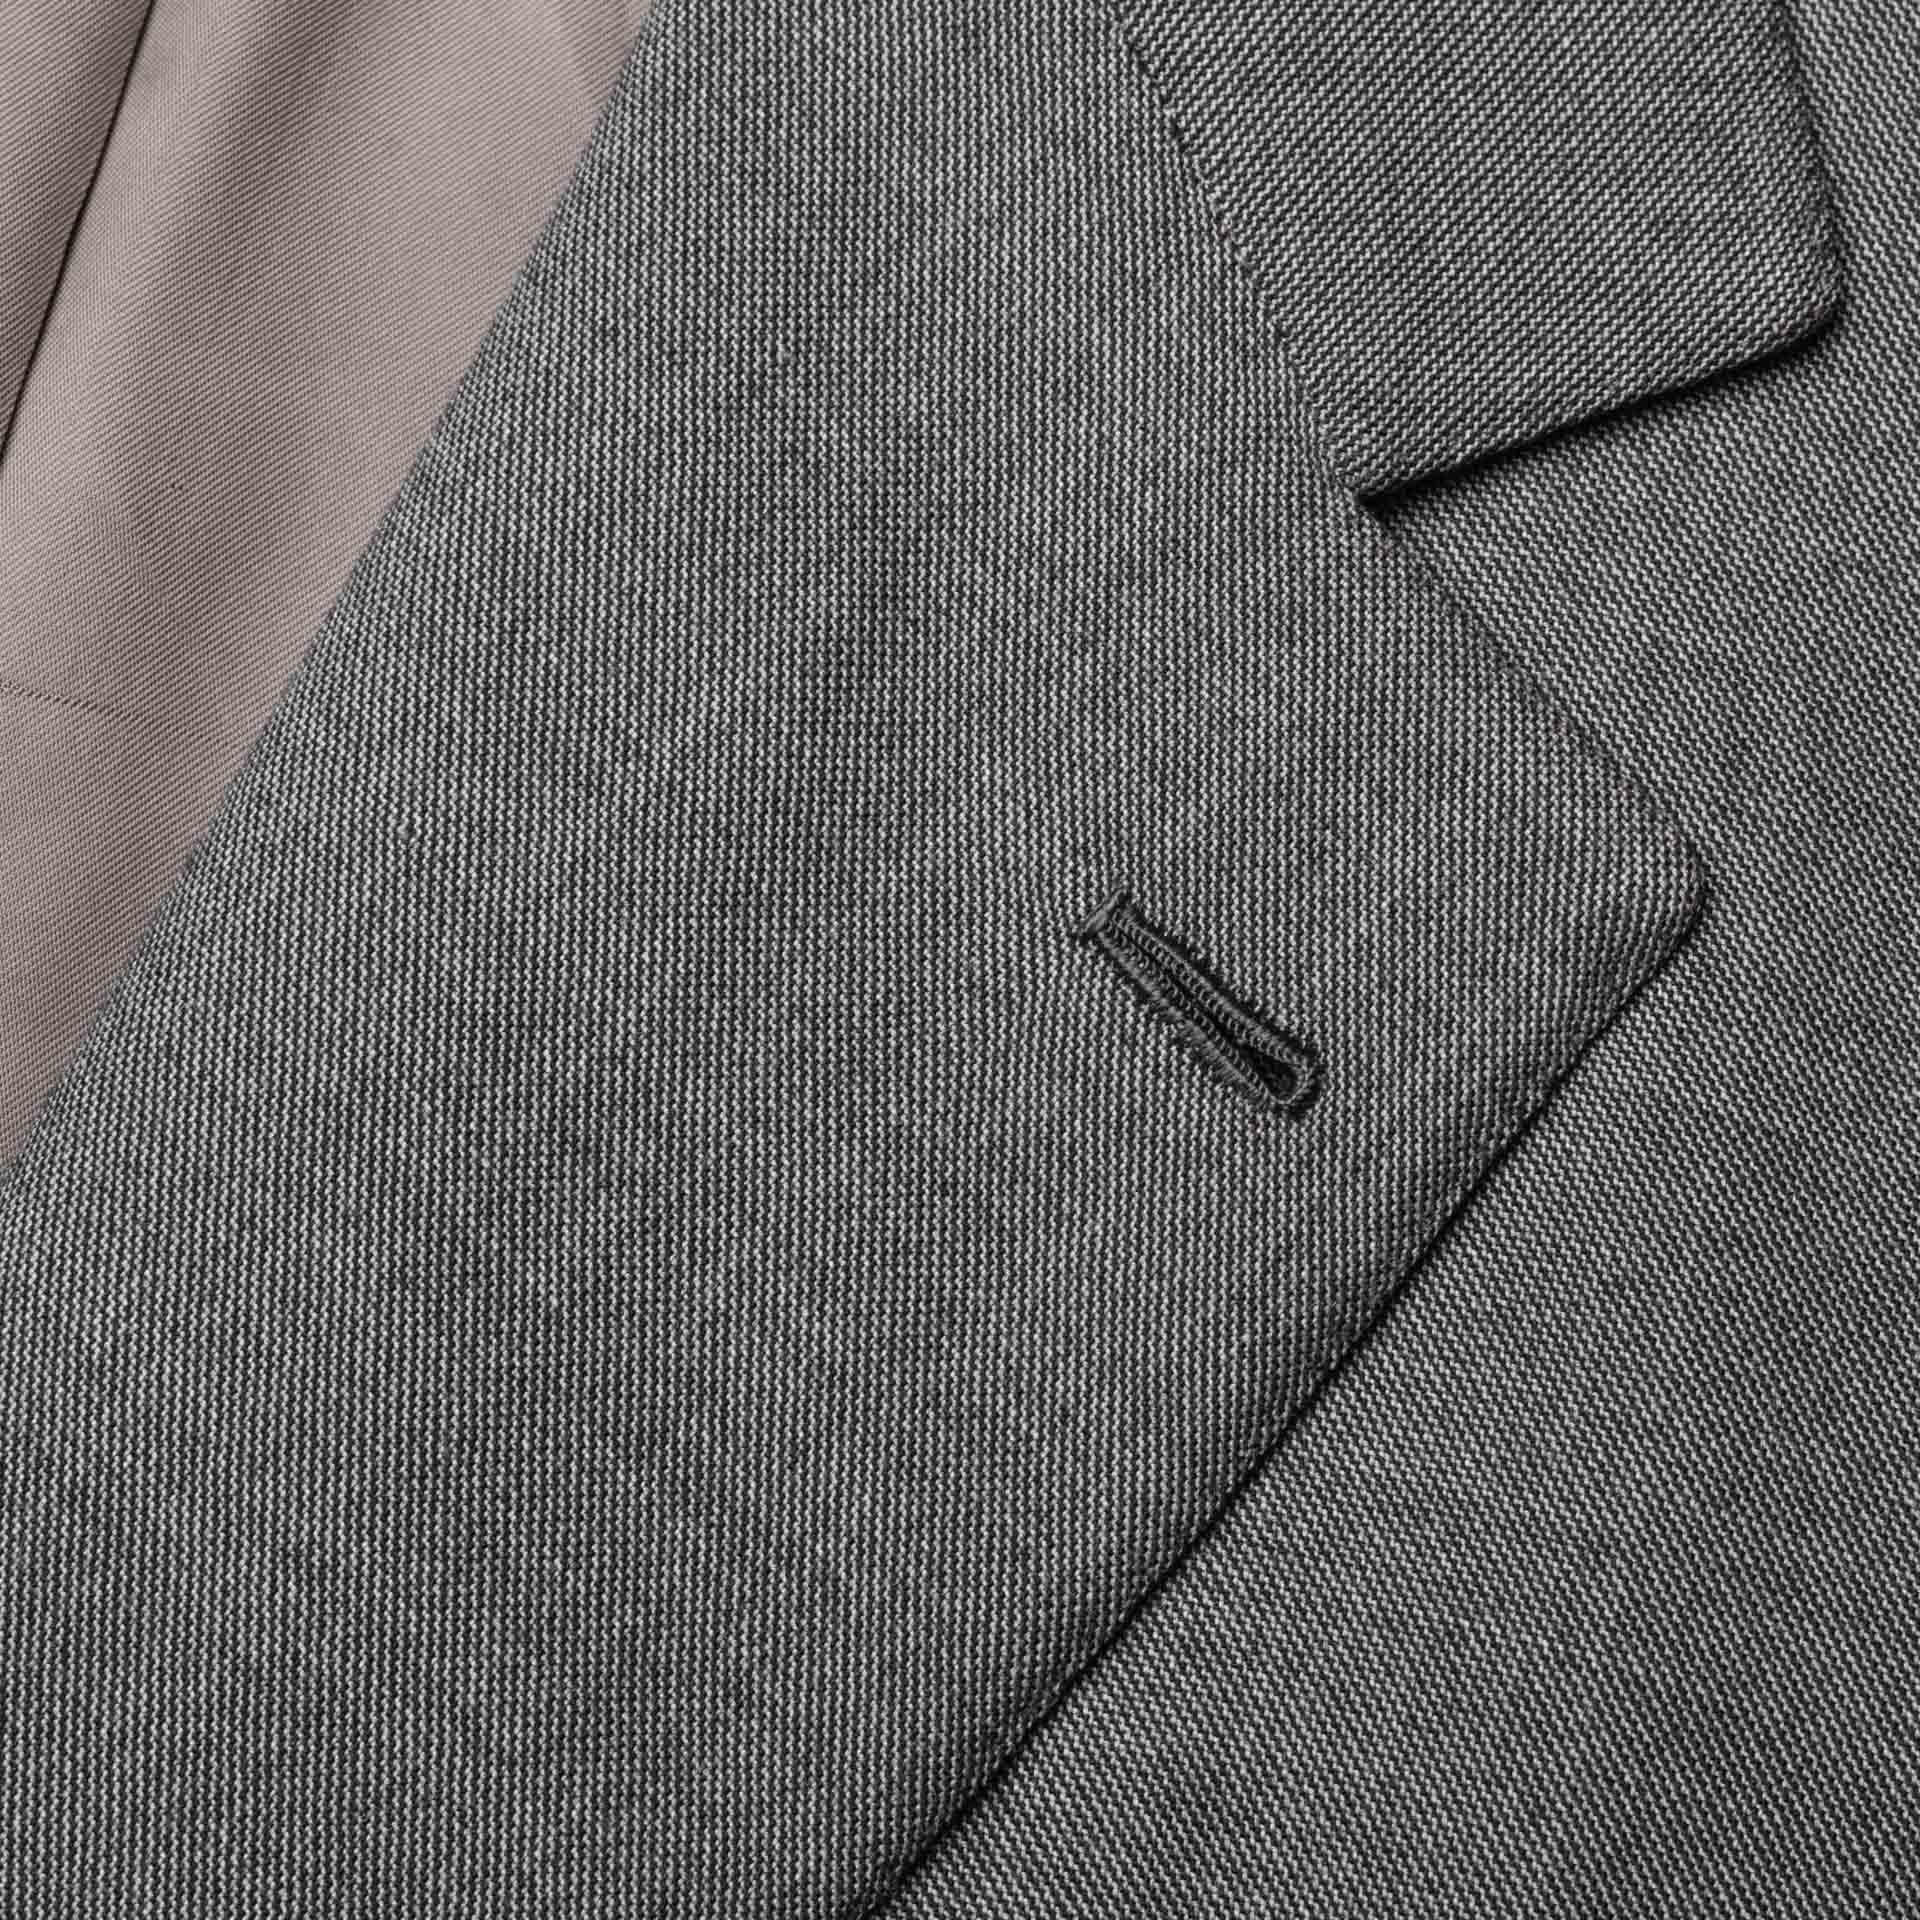 RUBINACCI LH Hand Made Bespoke Gray Wool Blazer Jacket EU 50 US 40 Long RUBINACCI